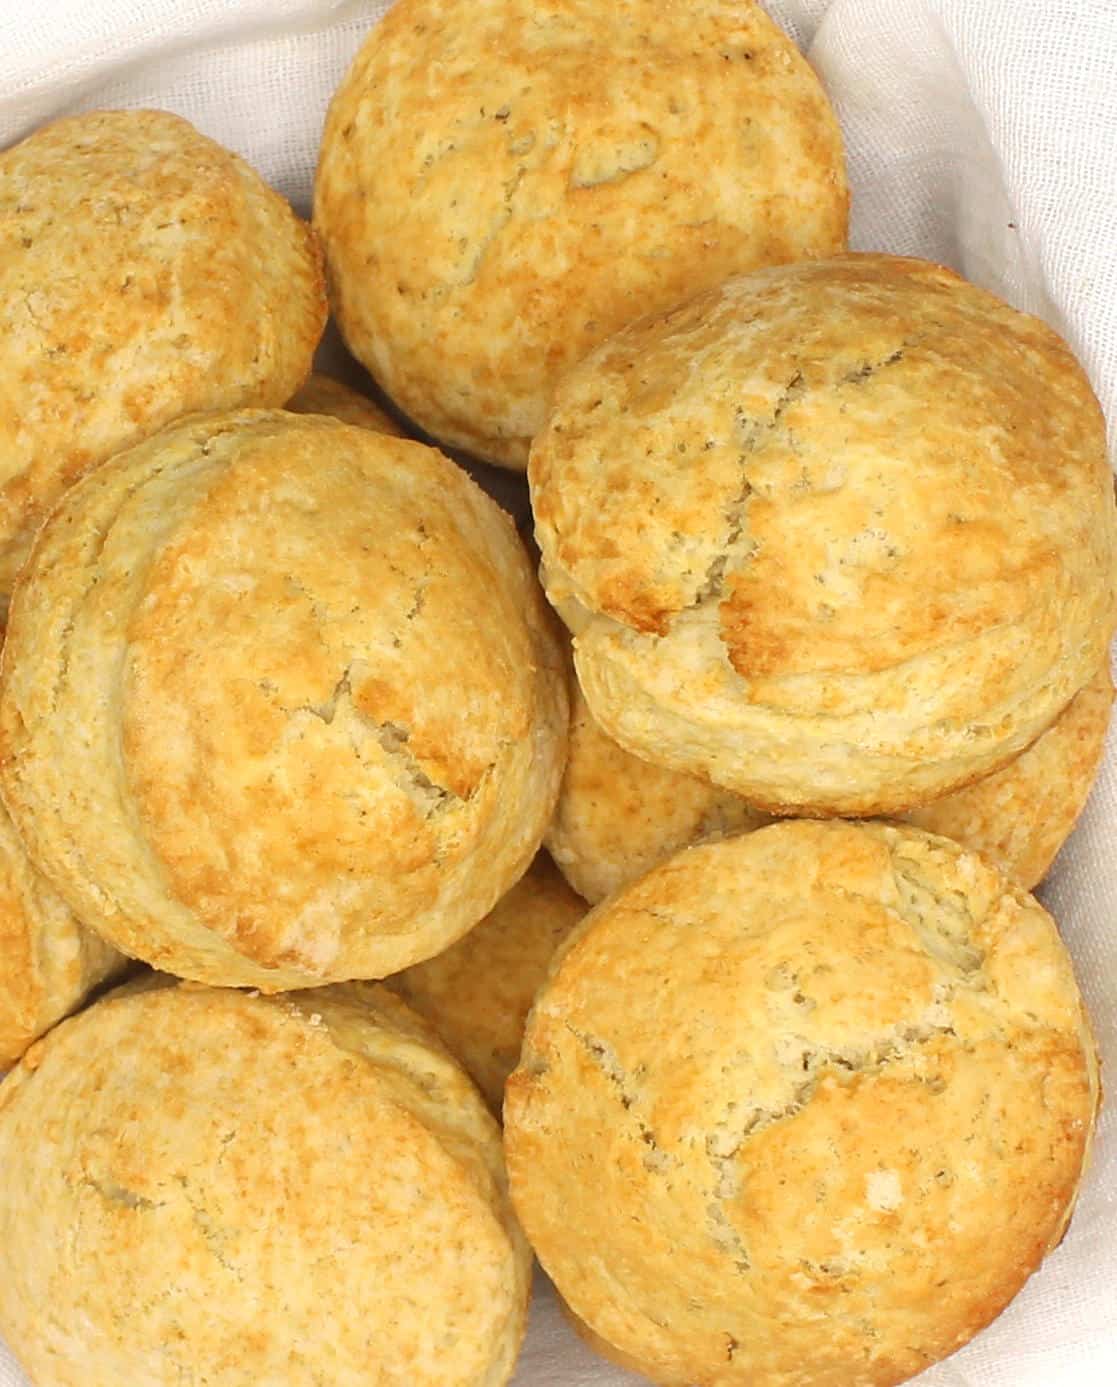 Fluffy vegan biscuits nestling in white kitchen napkin.